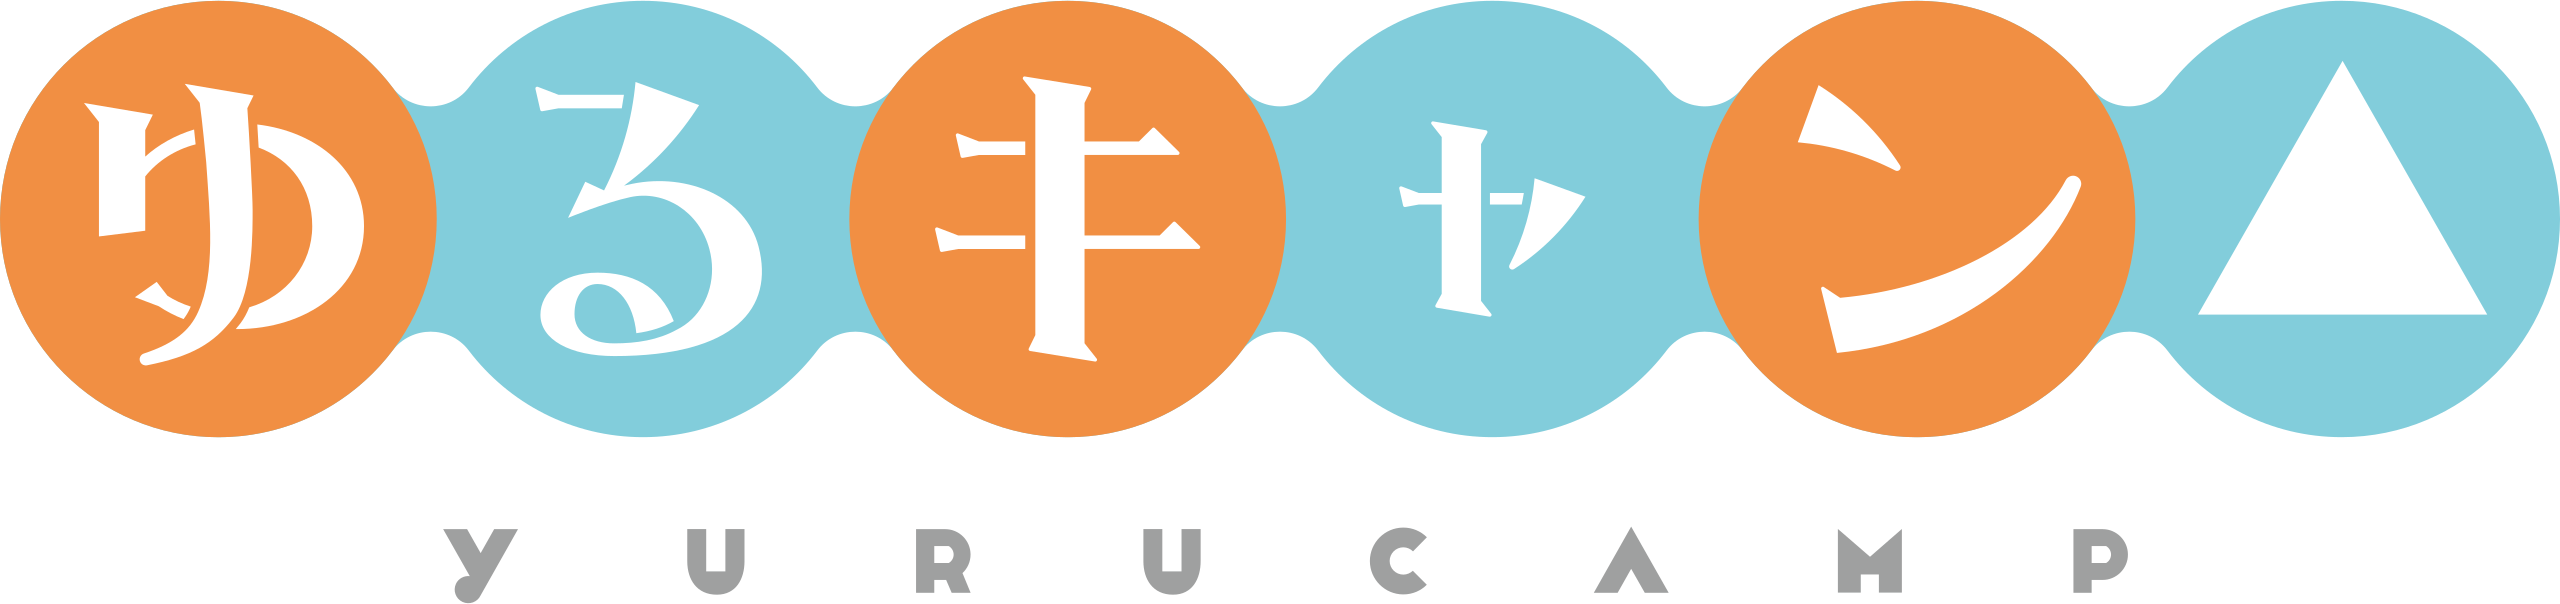 File Yuru Camp Logo Svg Wikimedia Commons